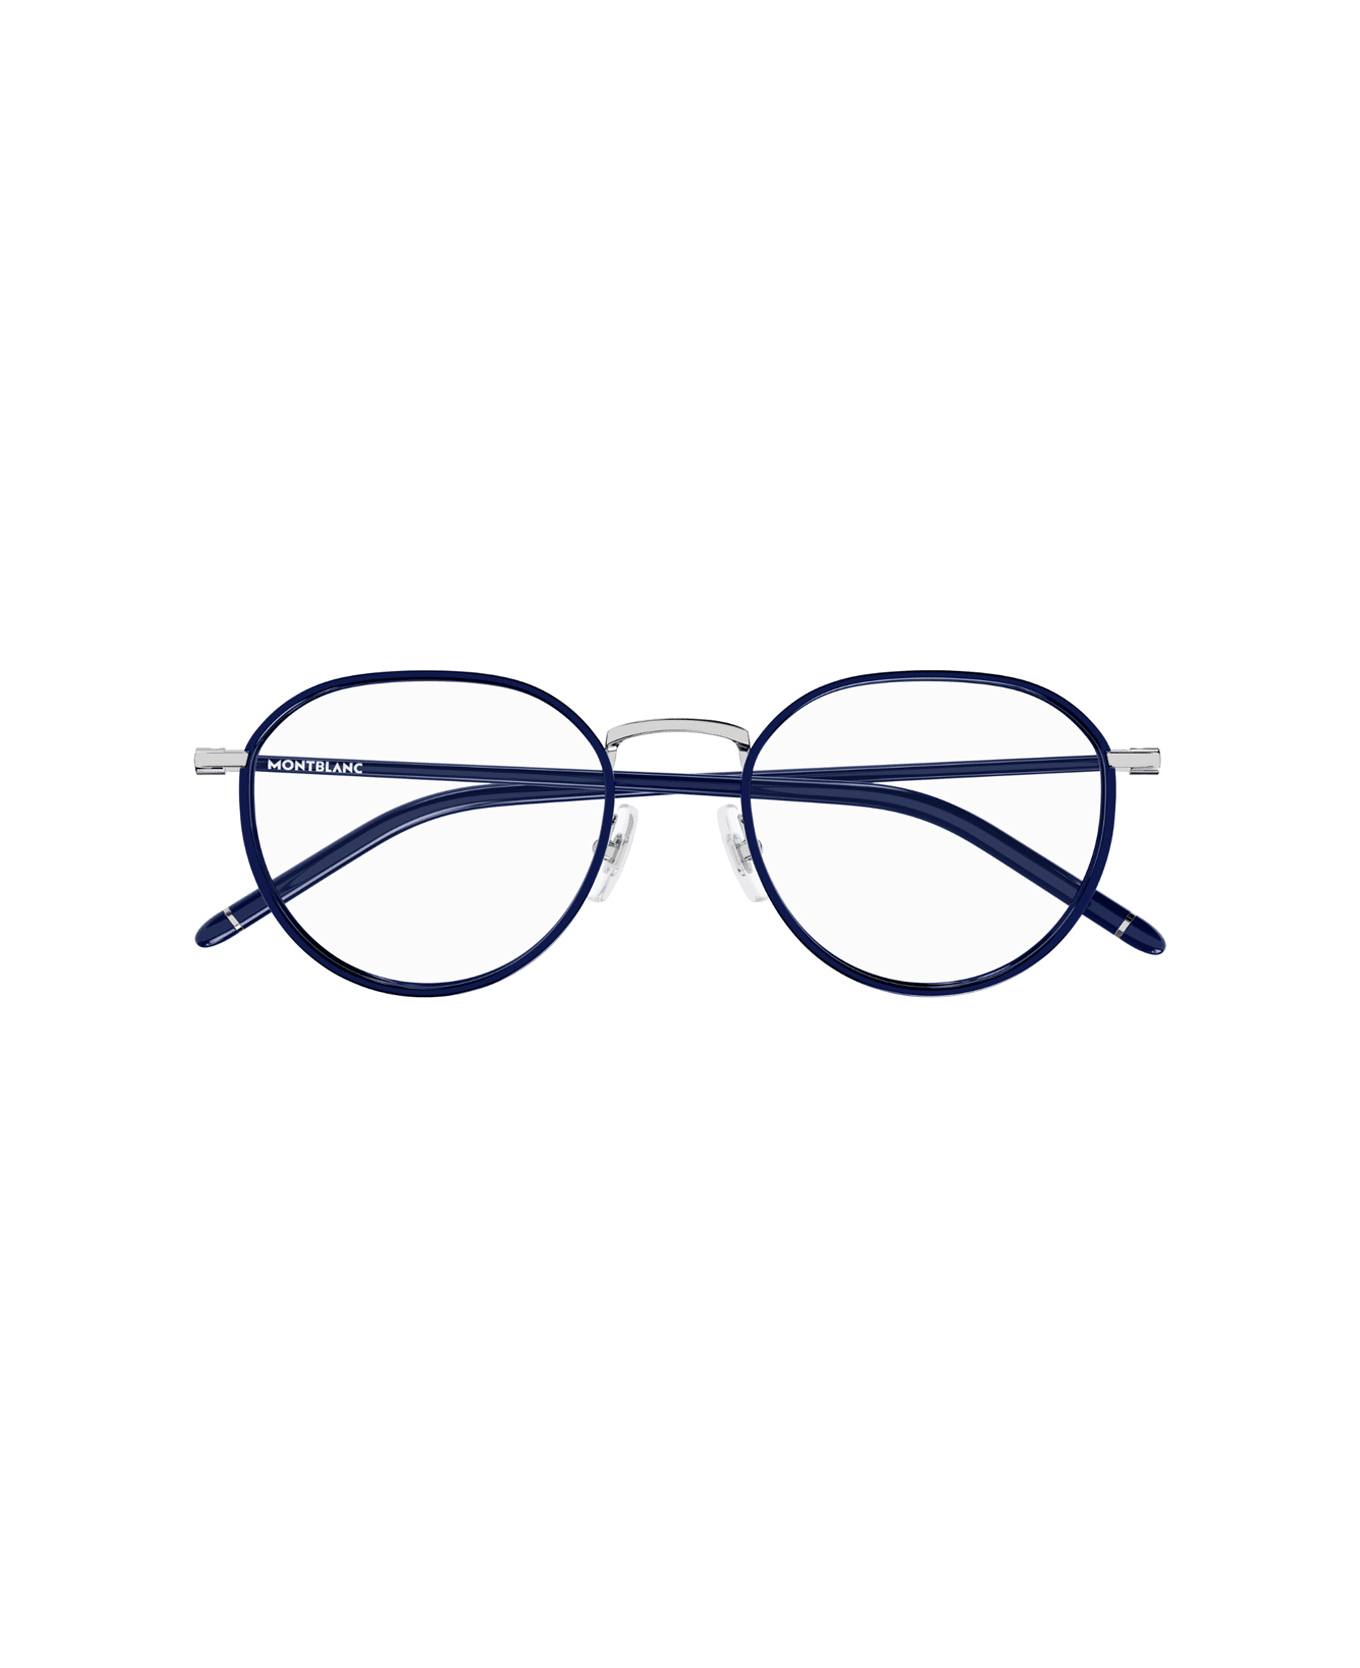 Montblanc Mb0342oa Linea Meisterstück 004 Glasses - Blu アイウェア